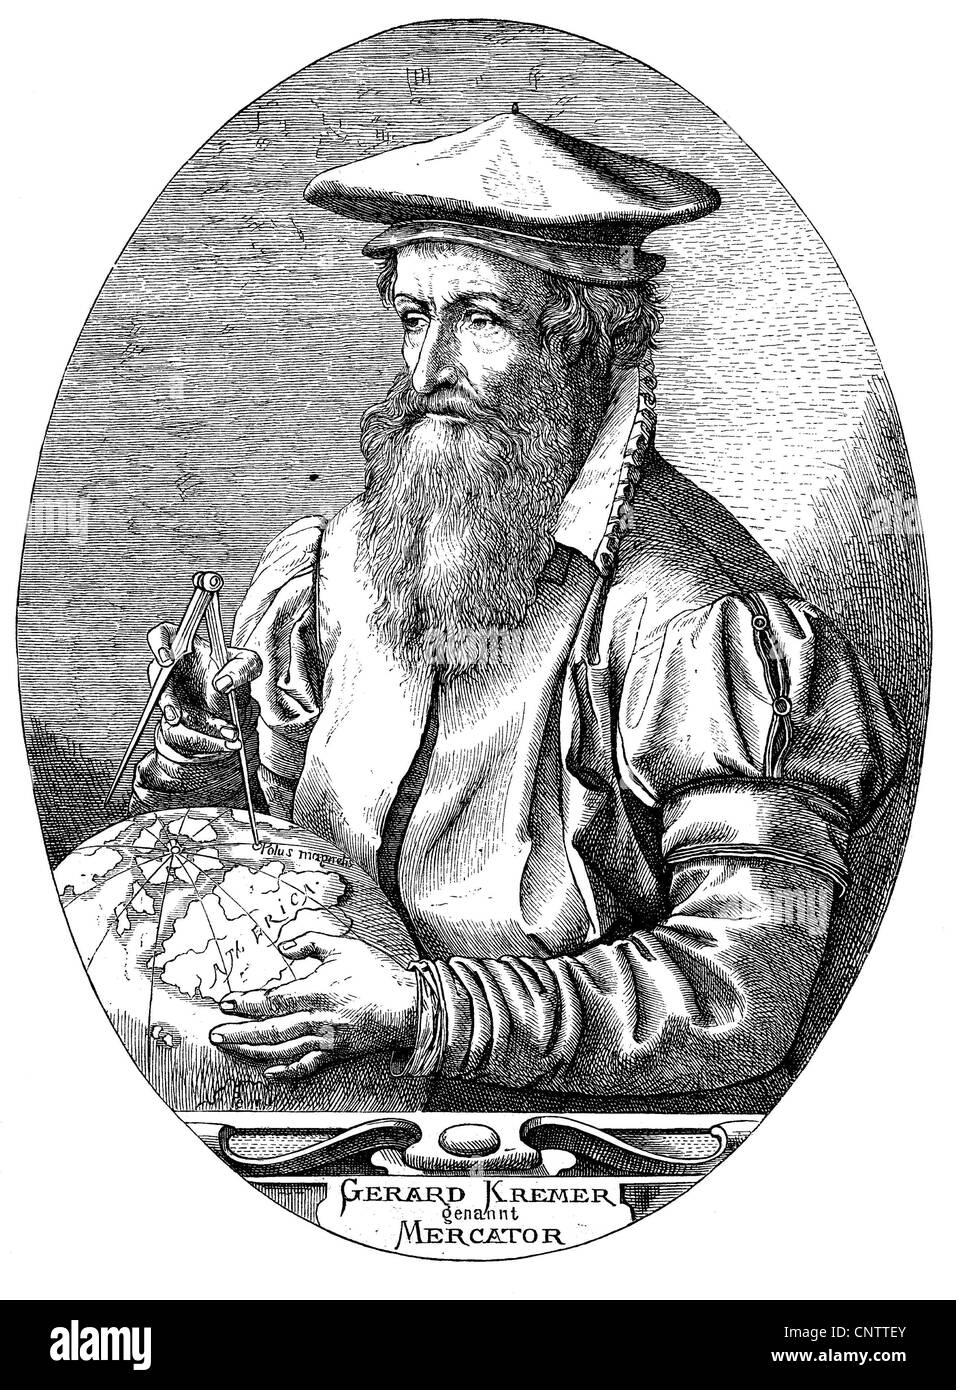 Mercator, Gerard De Kremer, Gerardus Mercator ou Gerhard Kramer, 1512-1594, mathématicien, géographe, philosophe, théologien Banque D'Images